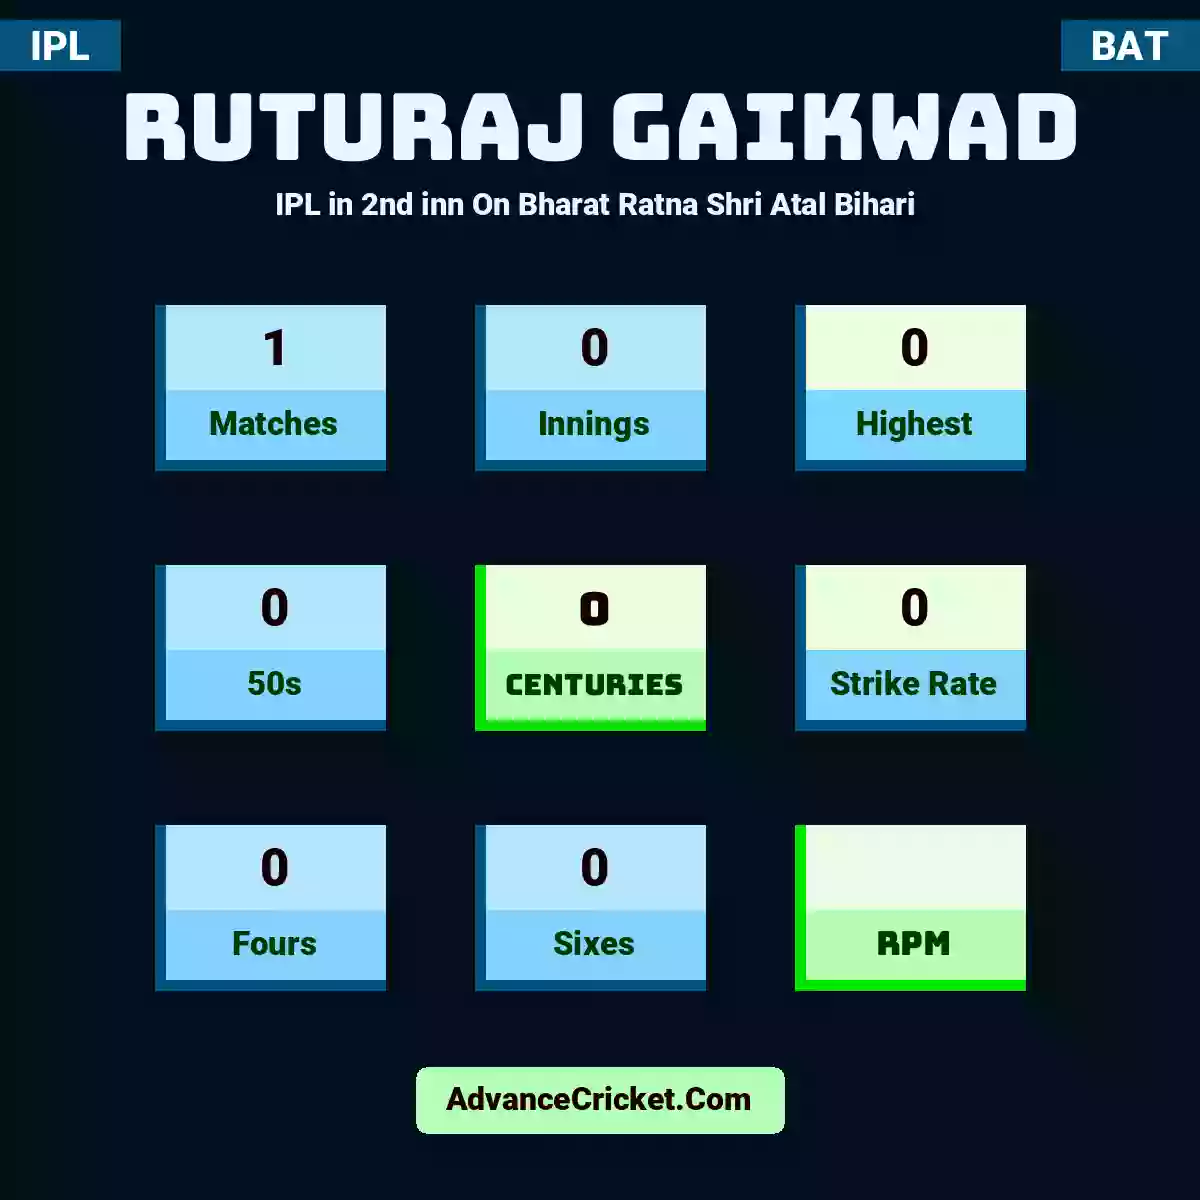 Ruturaj Gaikwad IPL  in 2nd inn On Bharat Ratna Shri Atal Bihari , Ruturaj Gaikwad played 1 matches, scored 0 runs as highest, 0 half-centuries, and 0 centuries, with a strike rate of 0. R.Gaikwad hit 0 fours and 0 sixes.